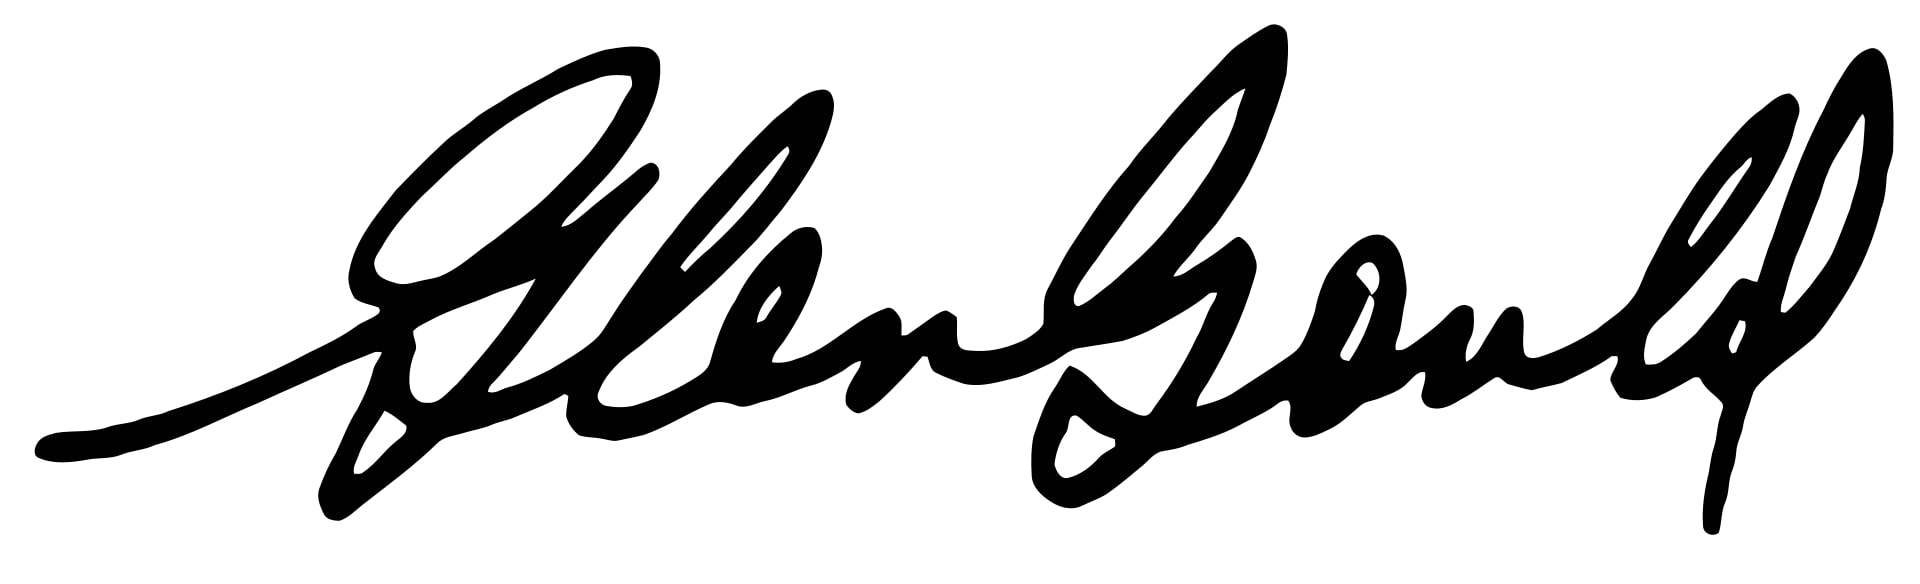 Glenn Gould Signature